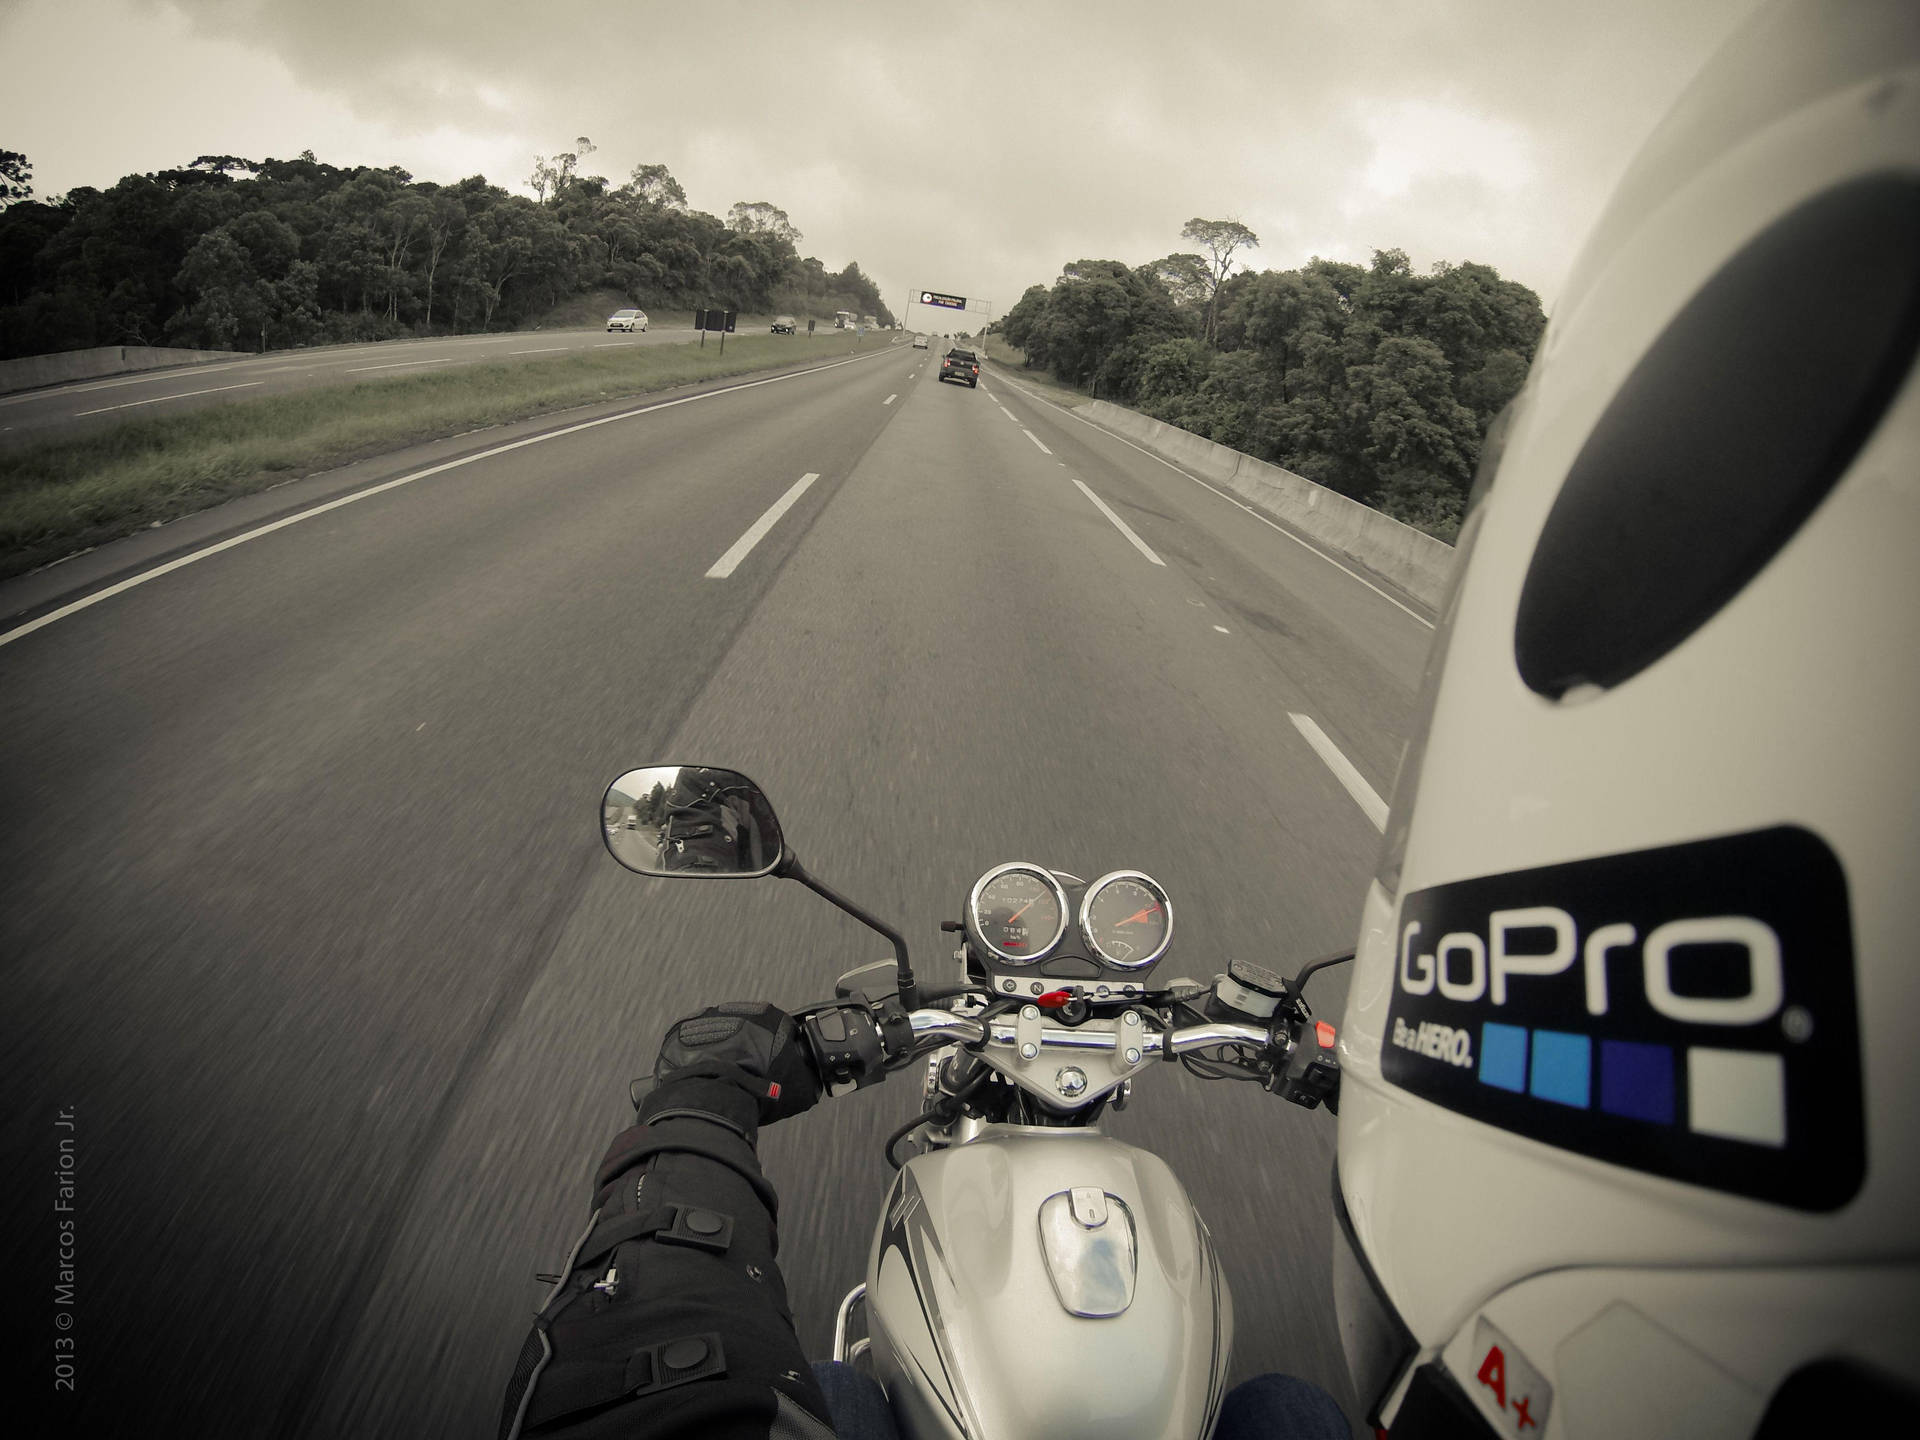 Gopro Motorcycle Helmet Background